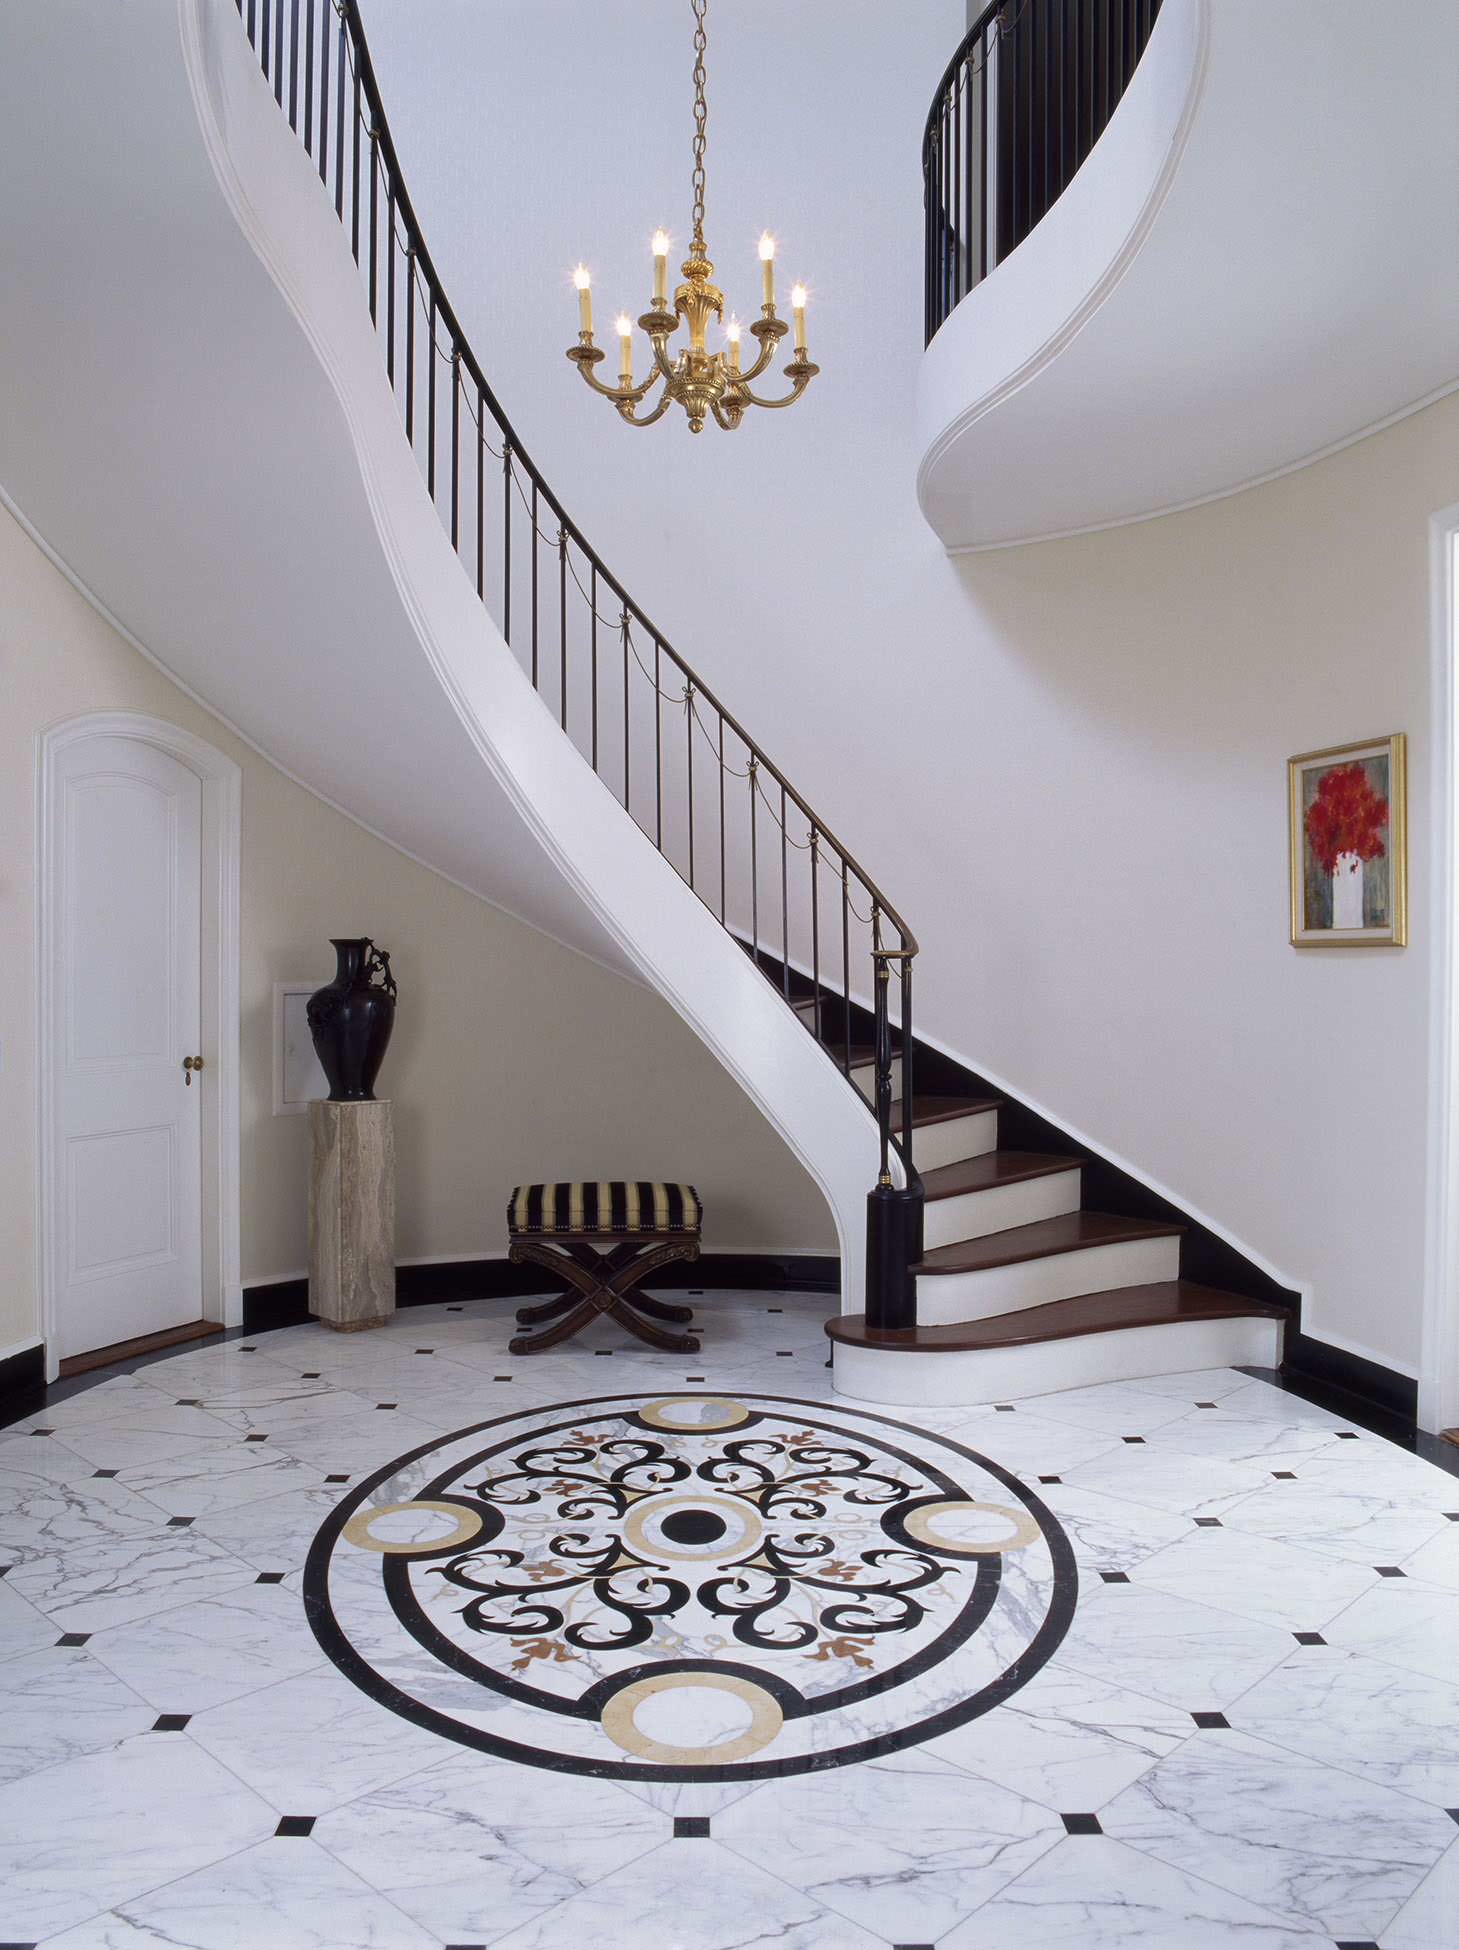 marble floor patterns - photos & ideas | houzz